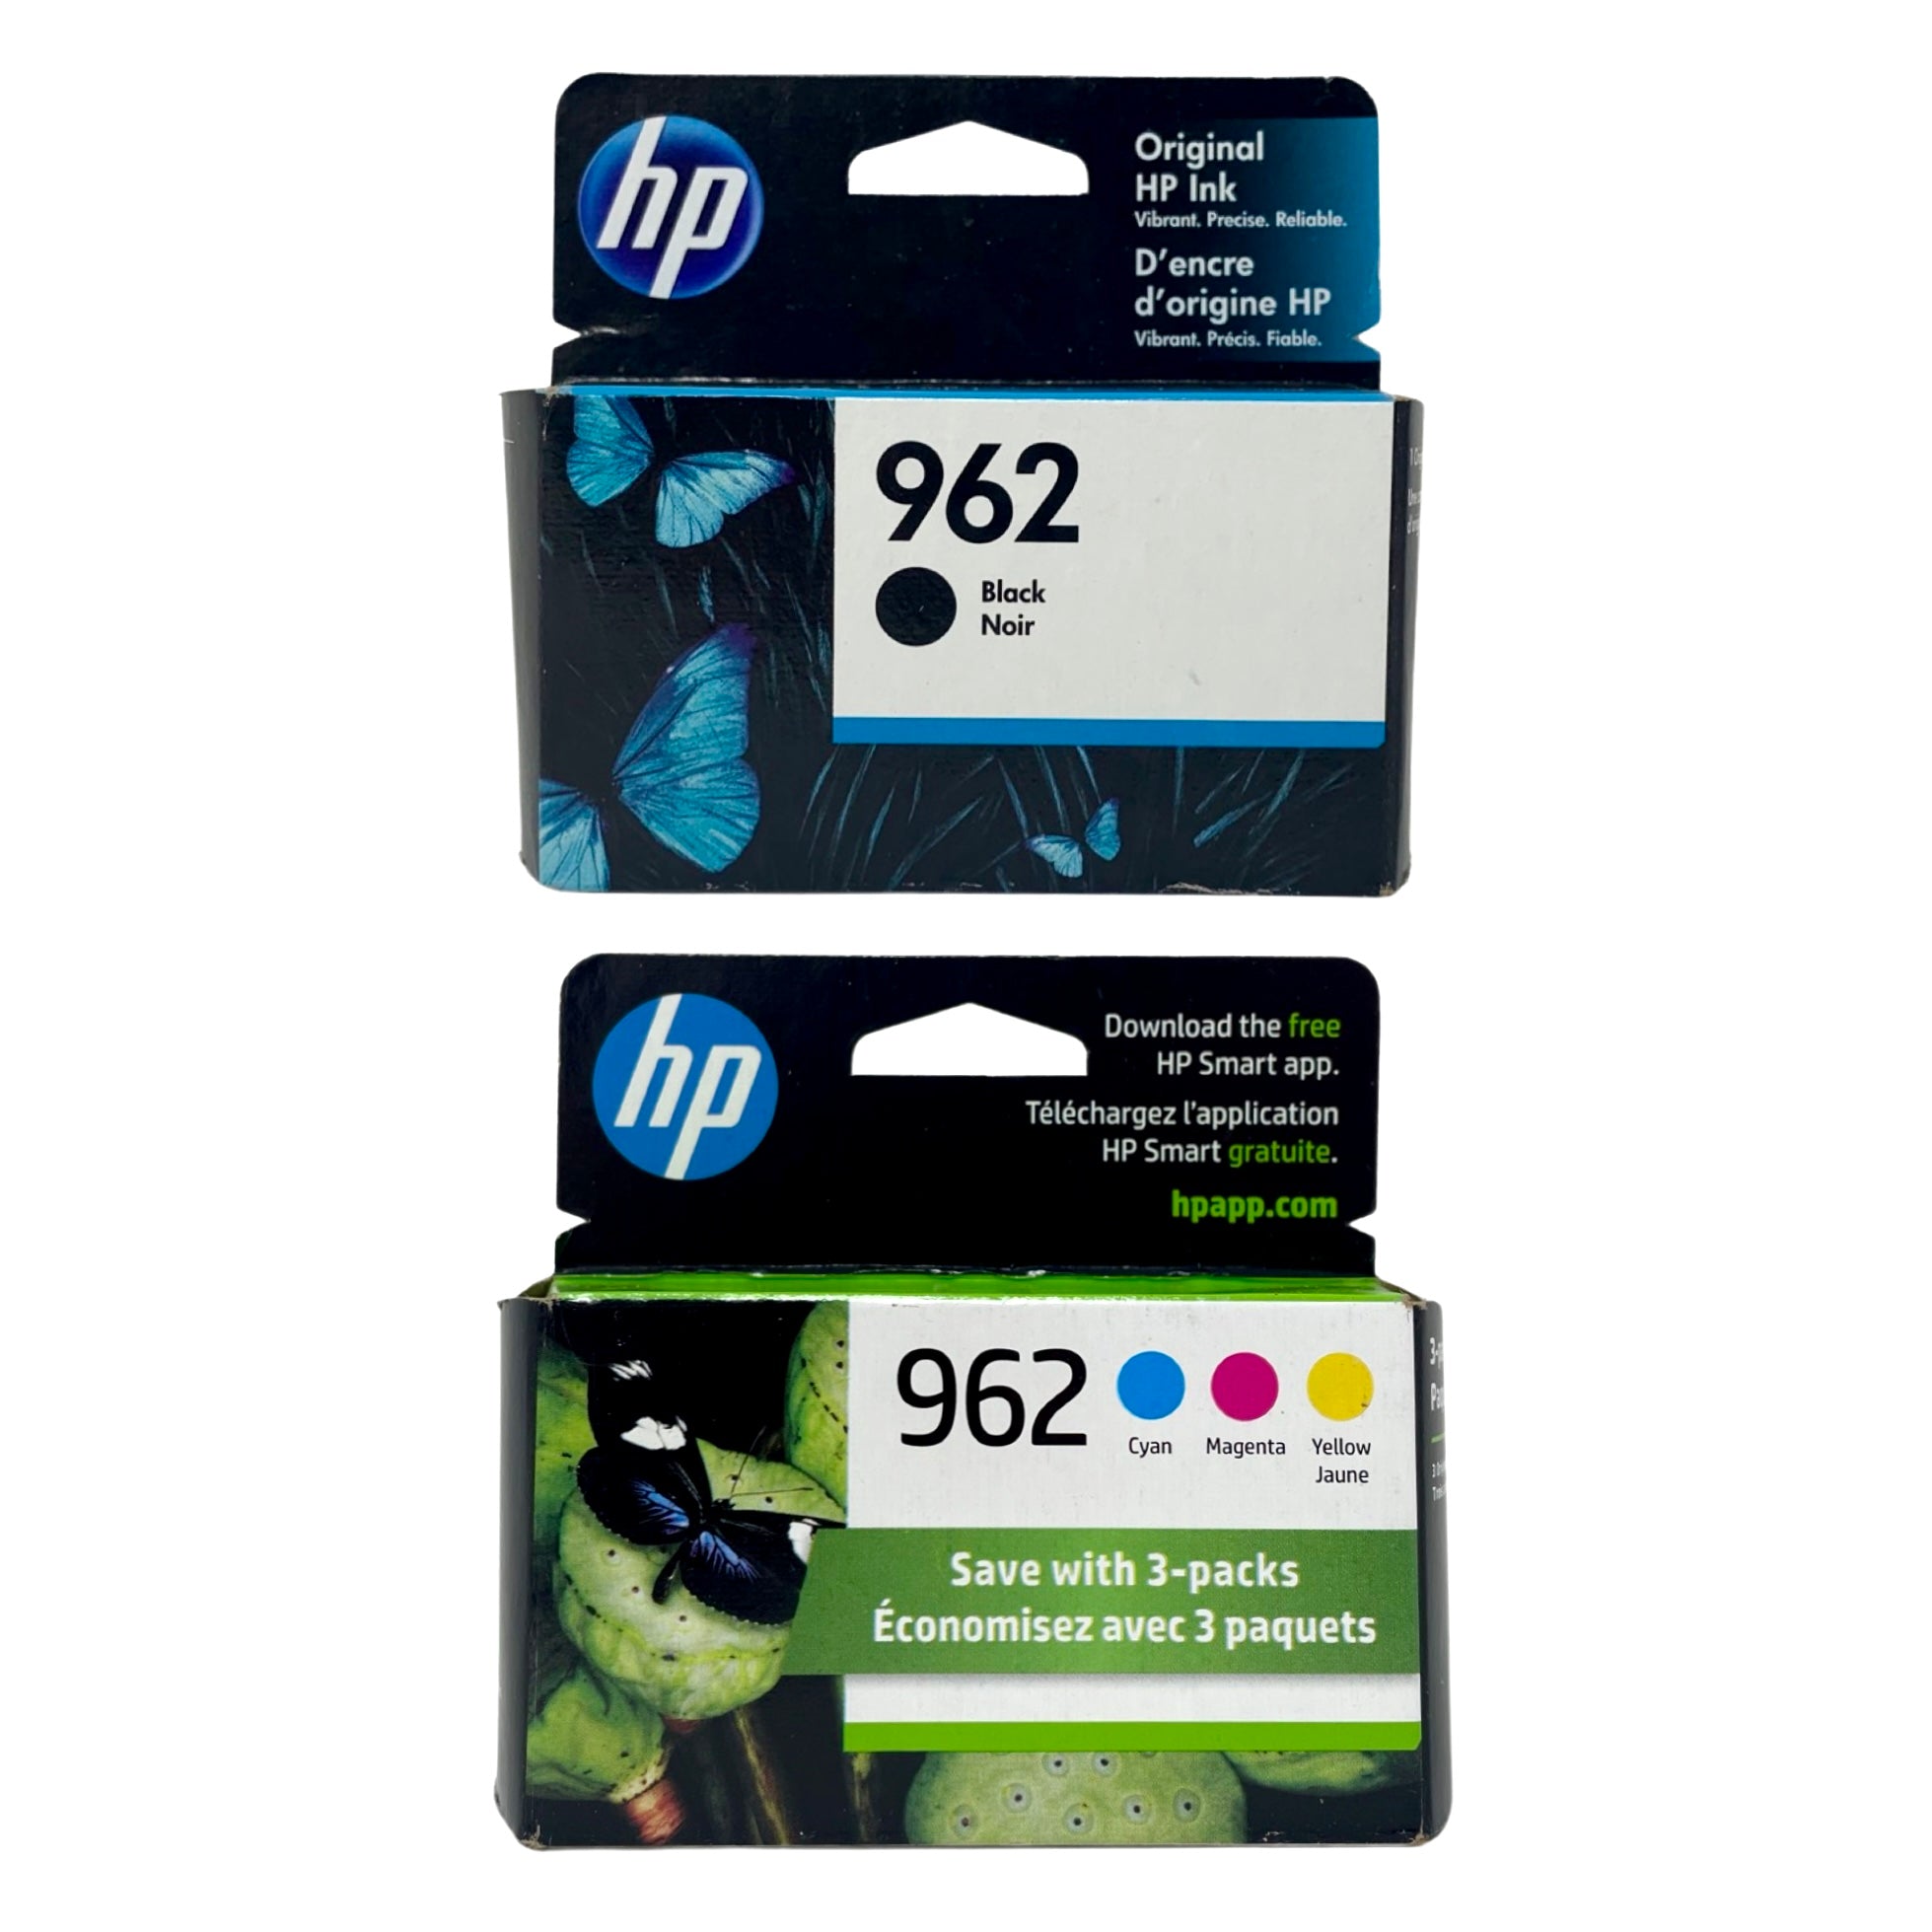 HP 962 Ink 4 pack – Black Cyan Magenta Yellow - Original HP Ink Cartridges (3YQ25AN)